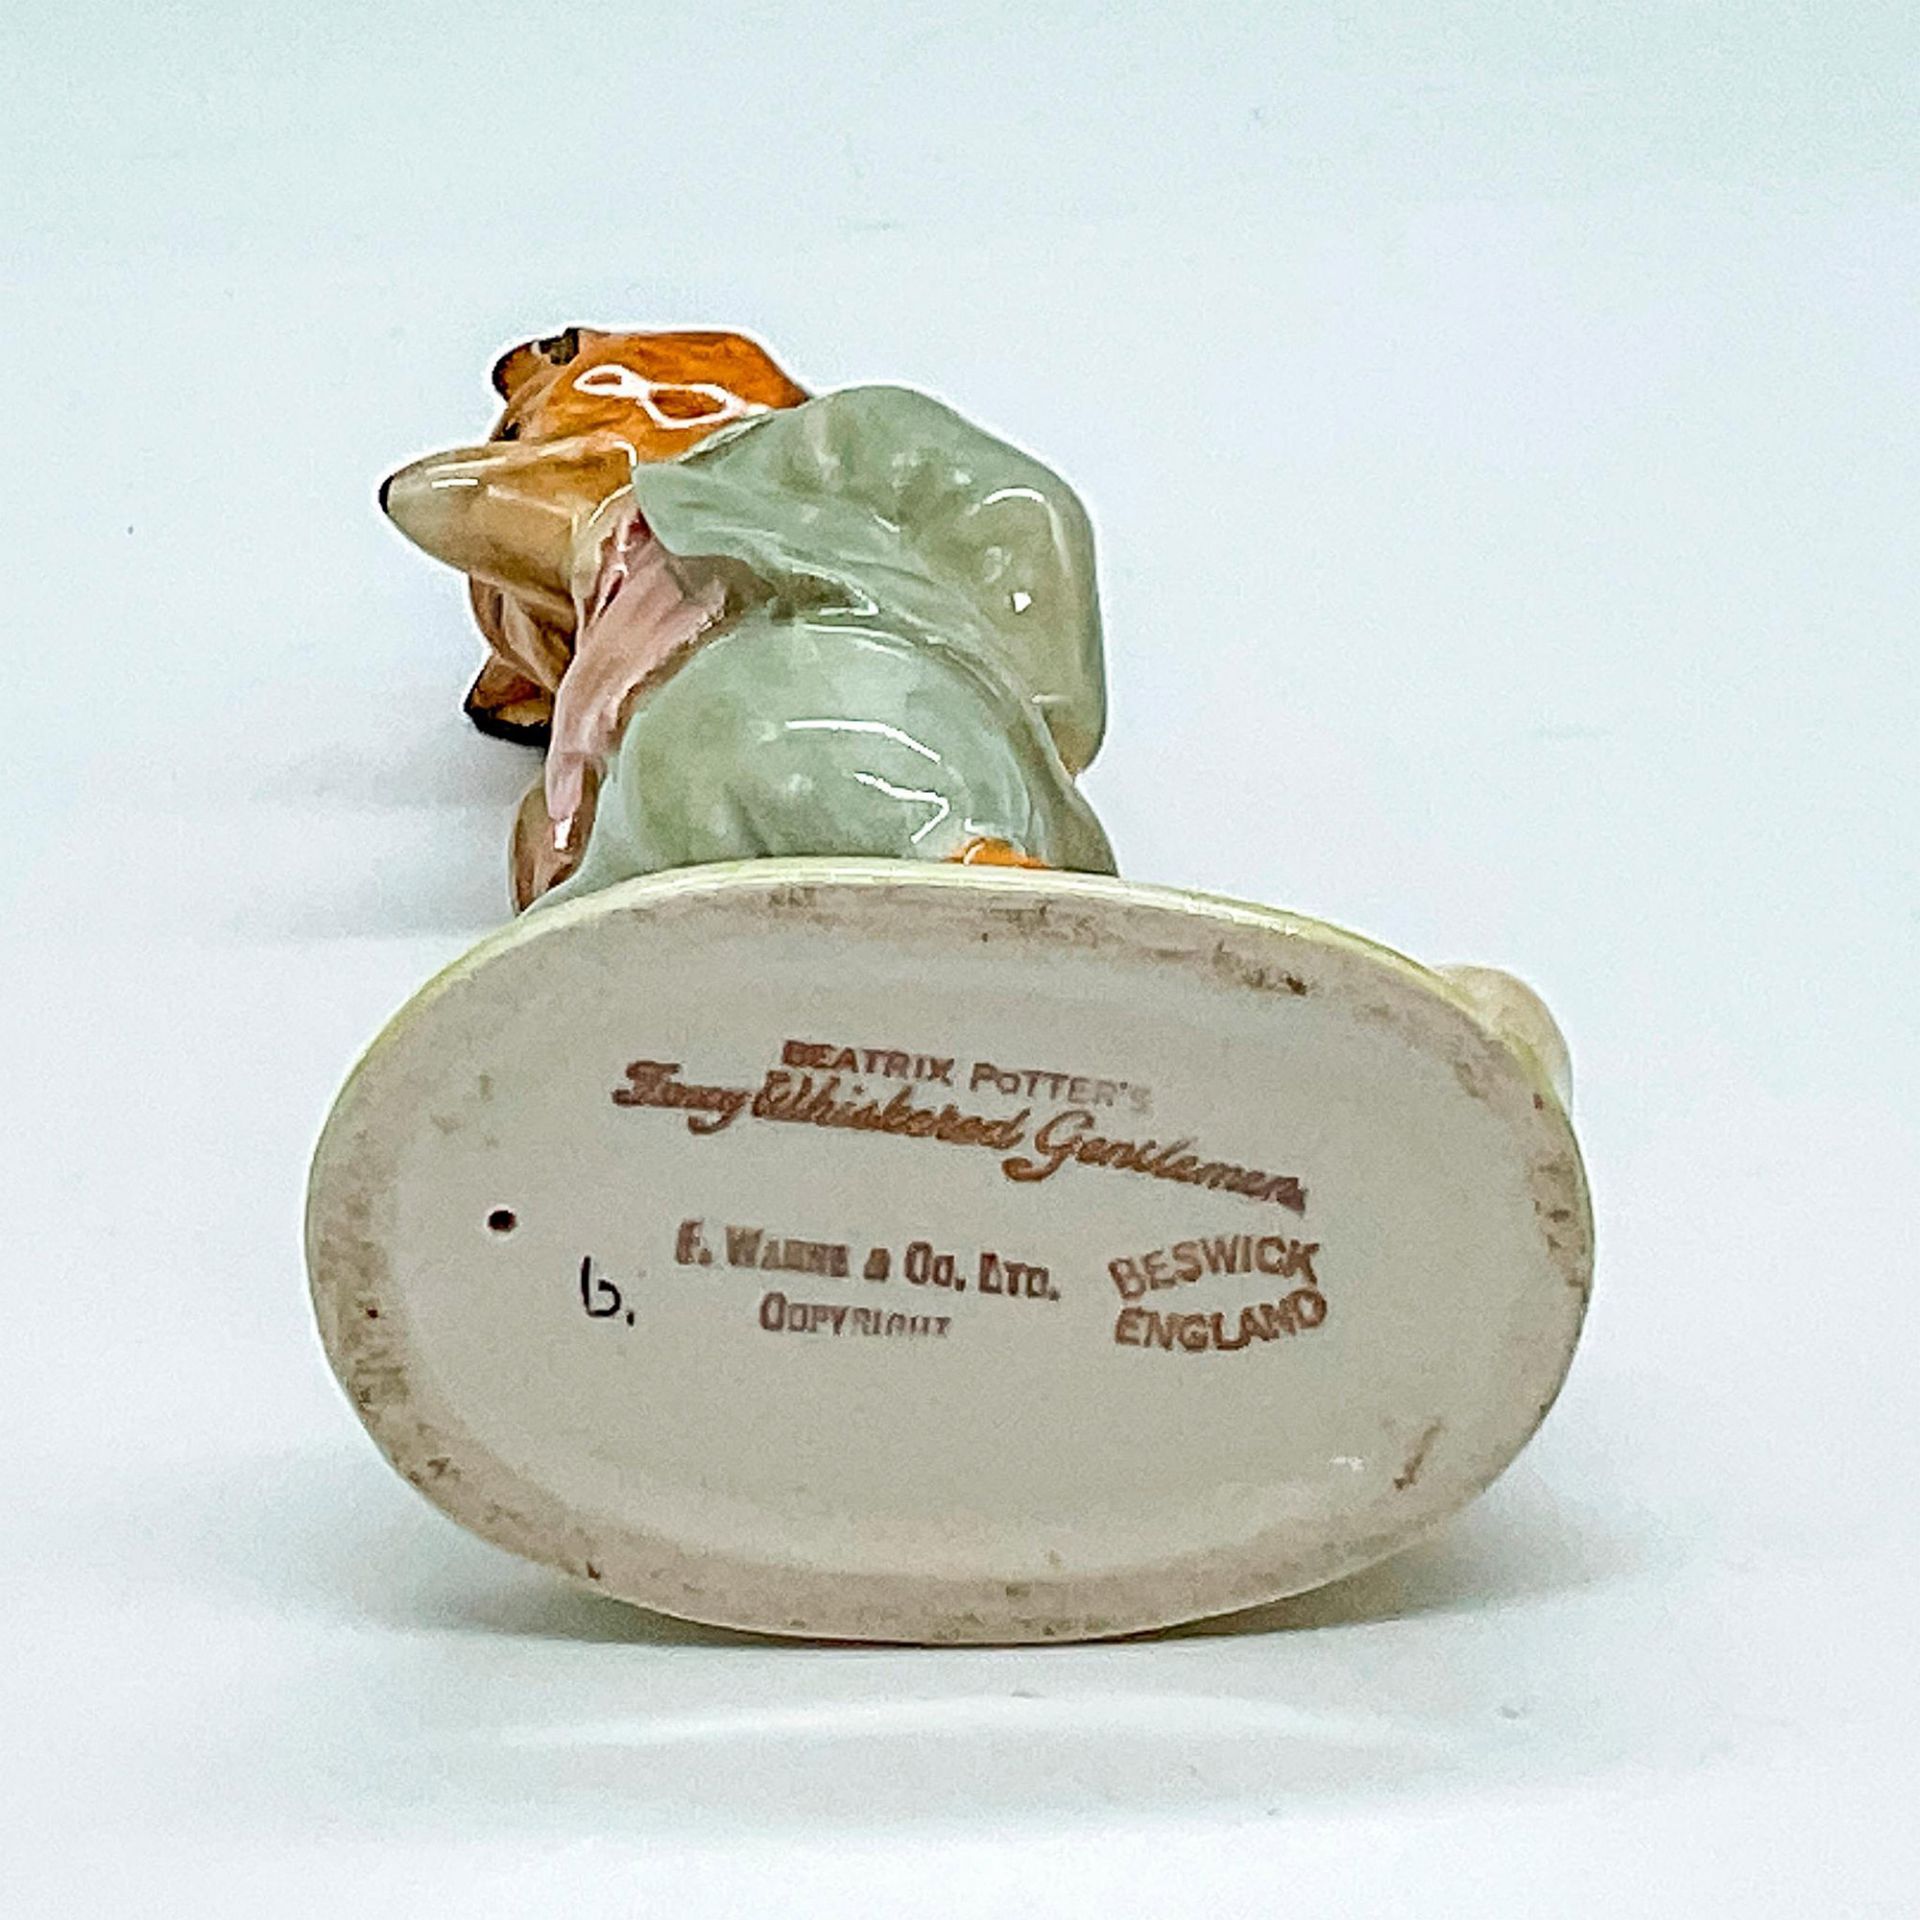 Beswick Beatrix Potter Figurine, Foxy Whiskered Gentleman - Image 3 of 3